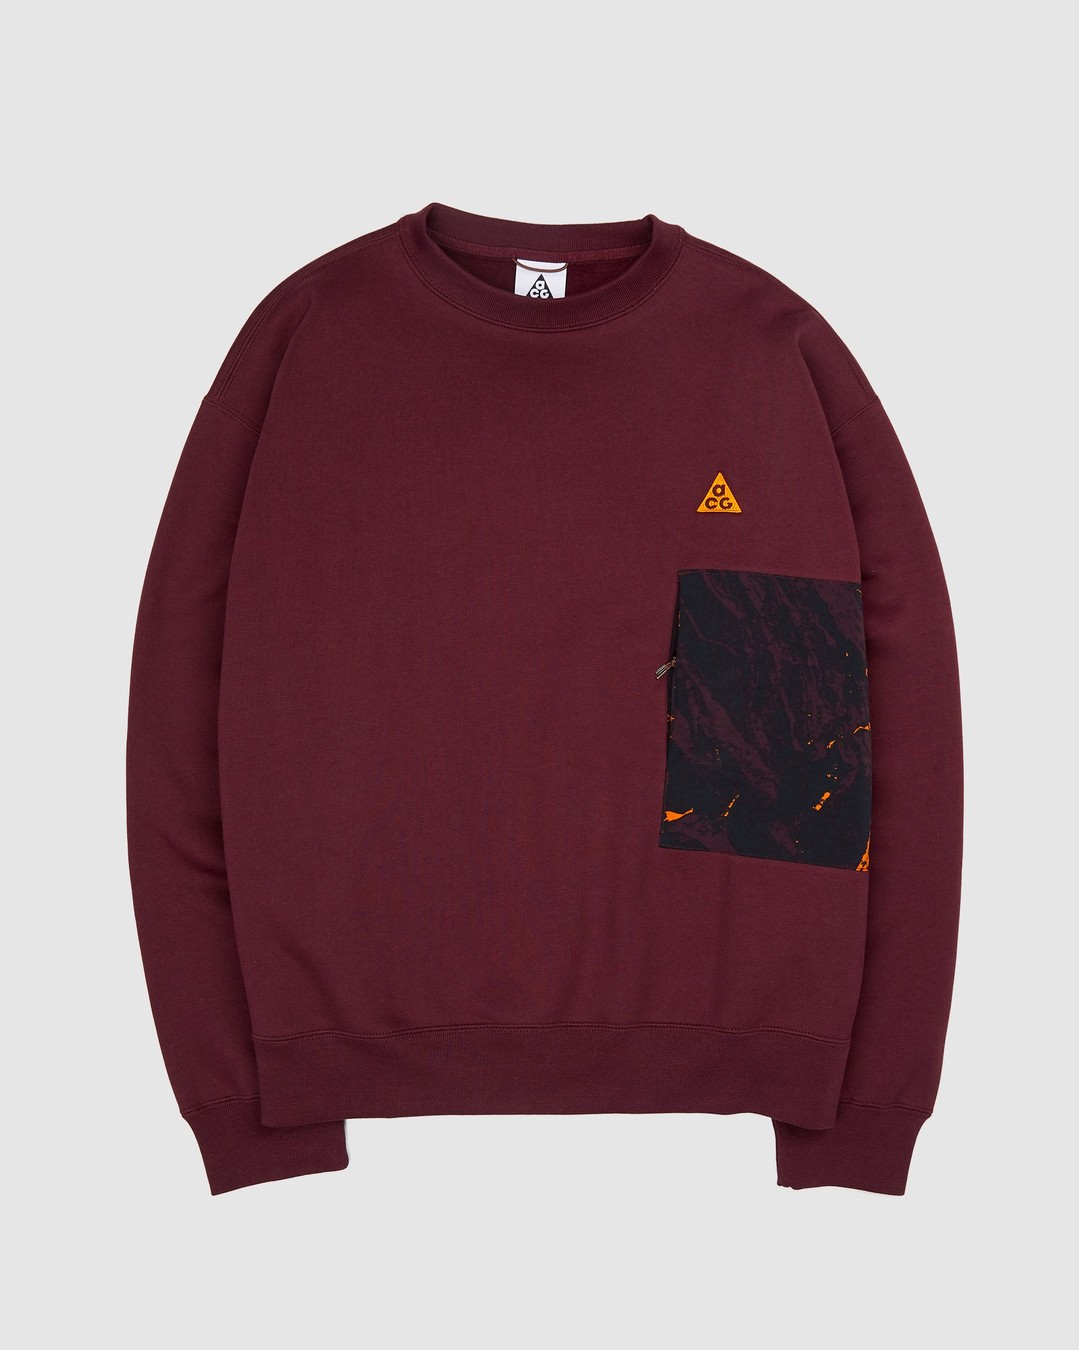 Nike ACG – Allover Print Crew Sweater Burgundy - Sweatshirts - Red - Image 1